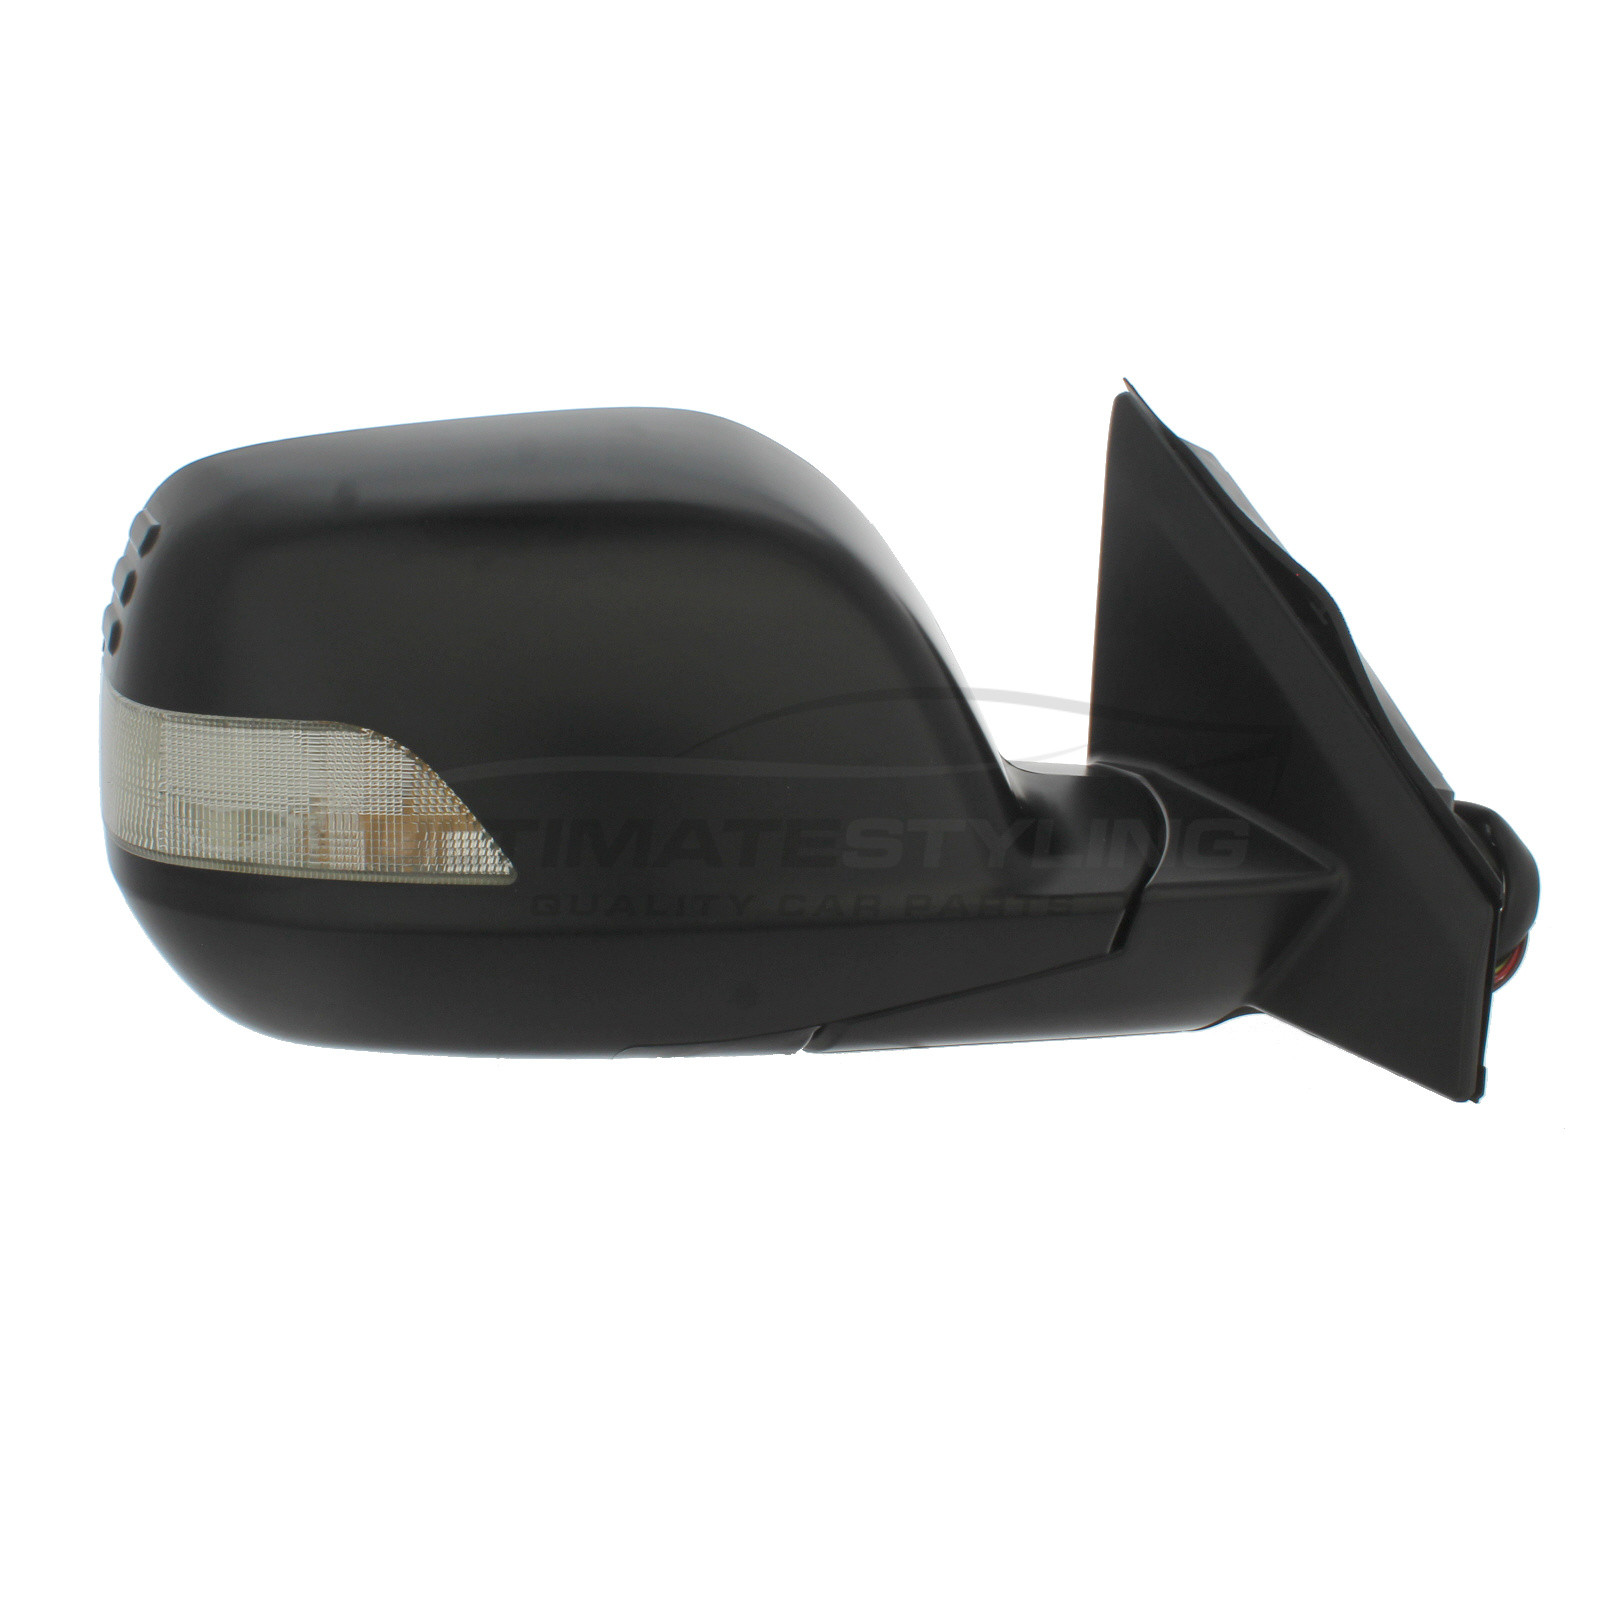 Honda CR-V Wing Mirror / Door Mirror - Drivers Side (RH) - Electric adjustment - Heated Glass - Indicator - Paintable - Black